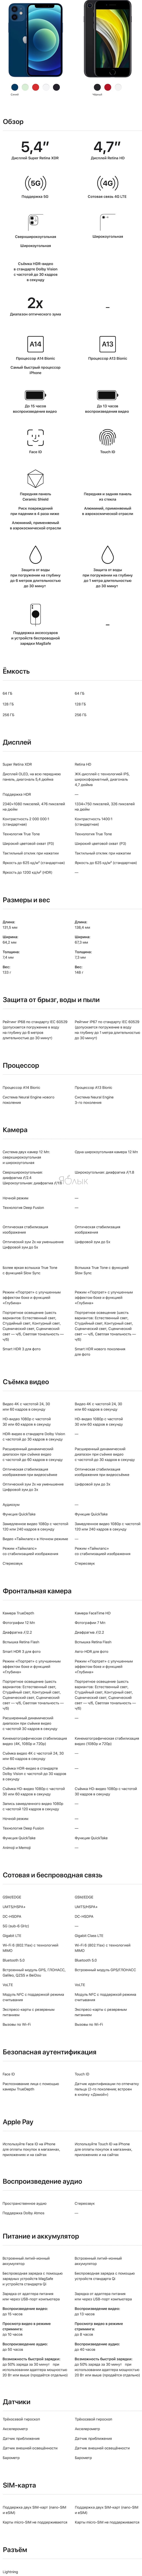 Подробное сравнение технических характеристик (спецификаций) iPhone 12 mini и iPhone SE 2 (2020)